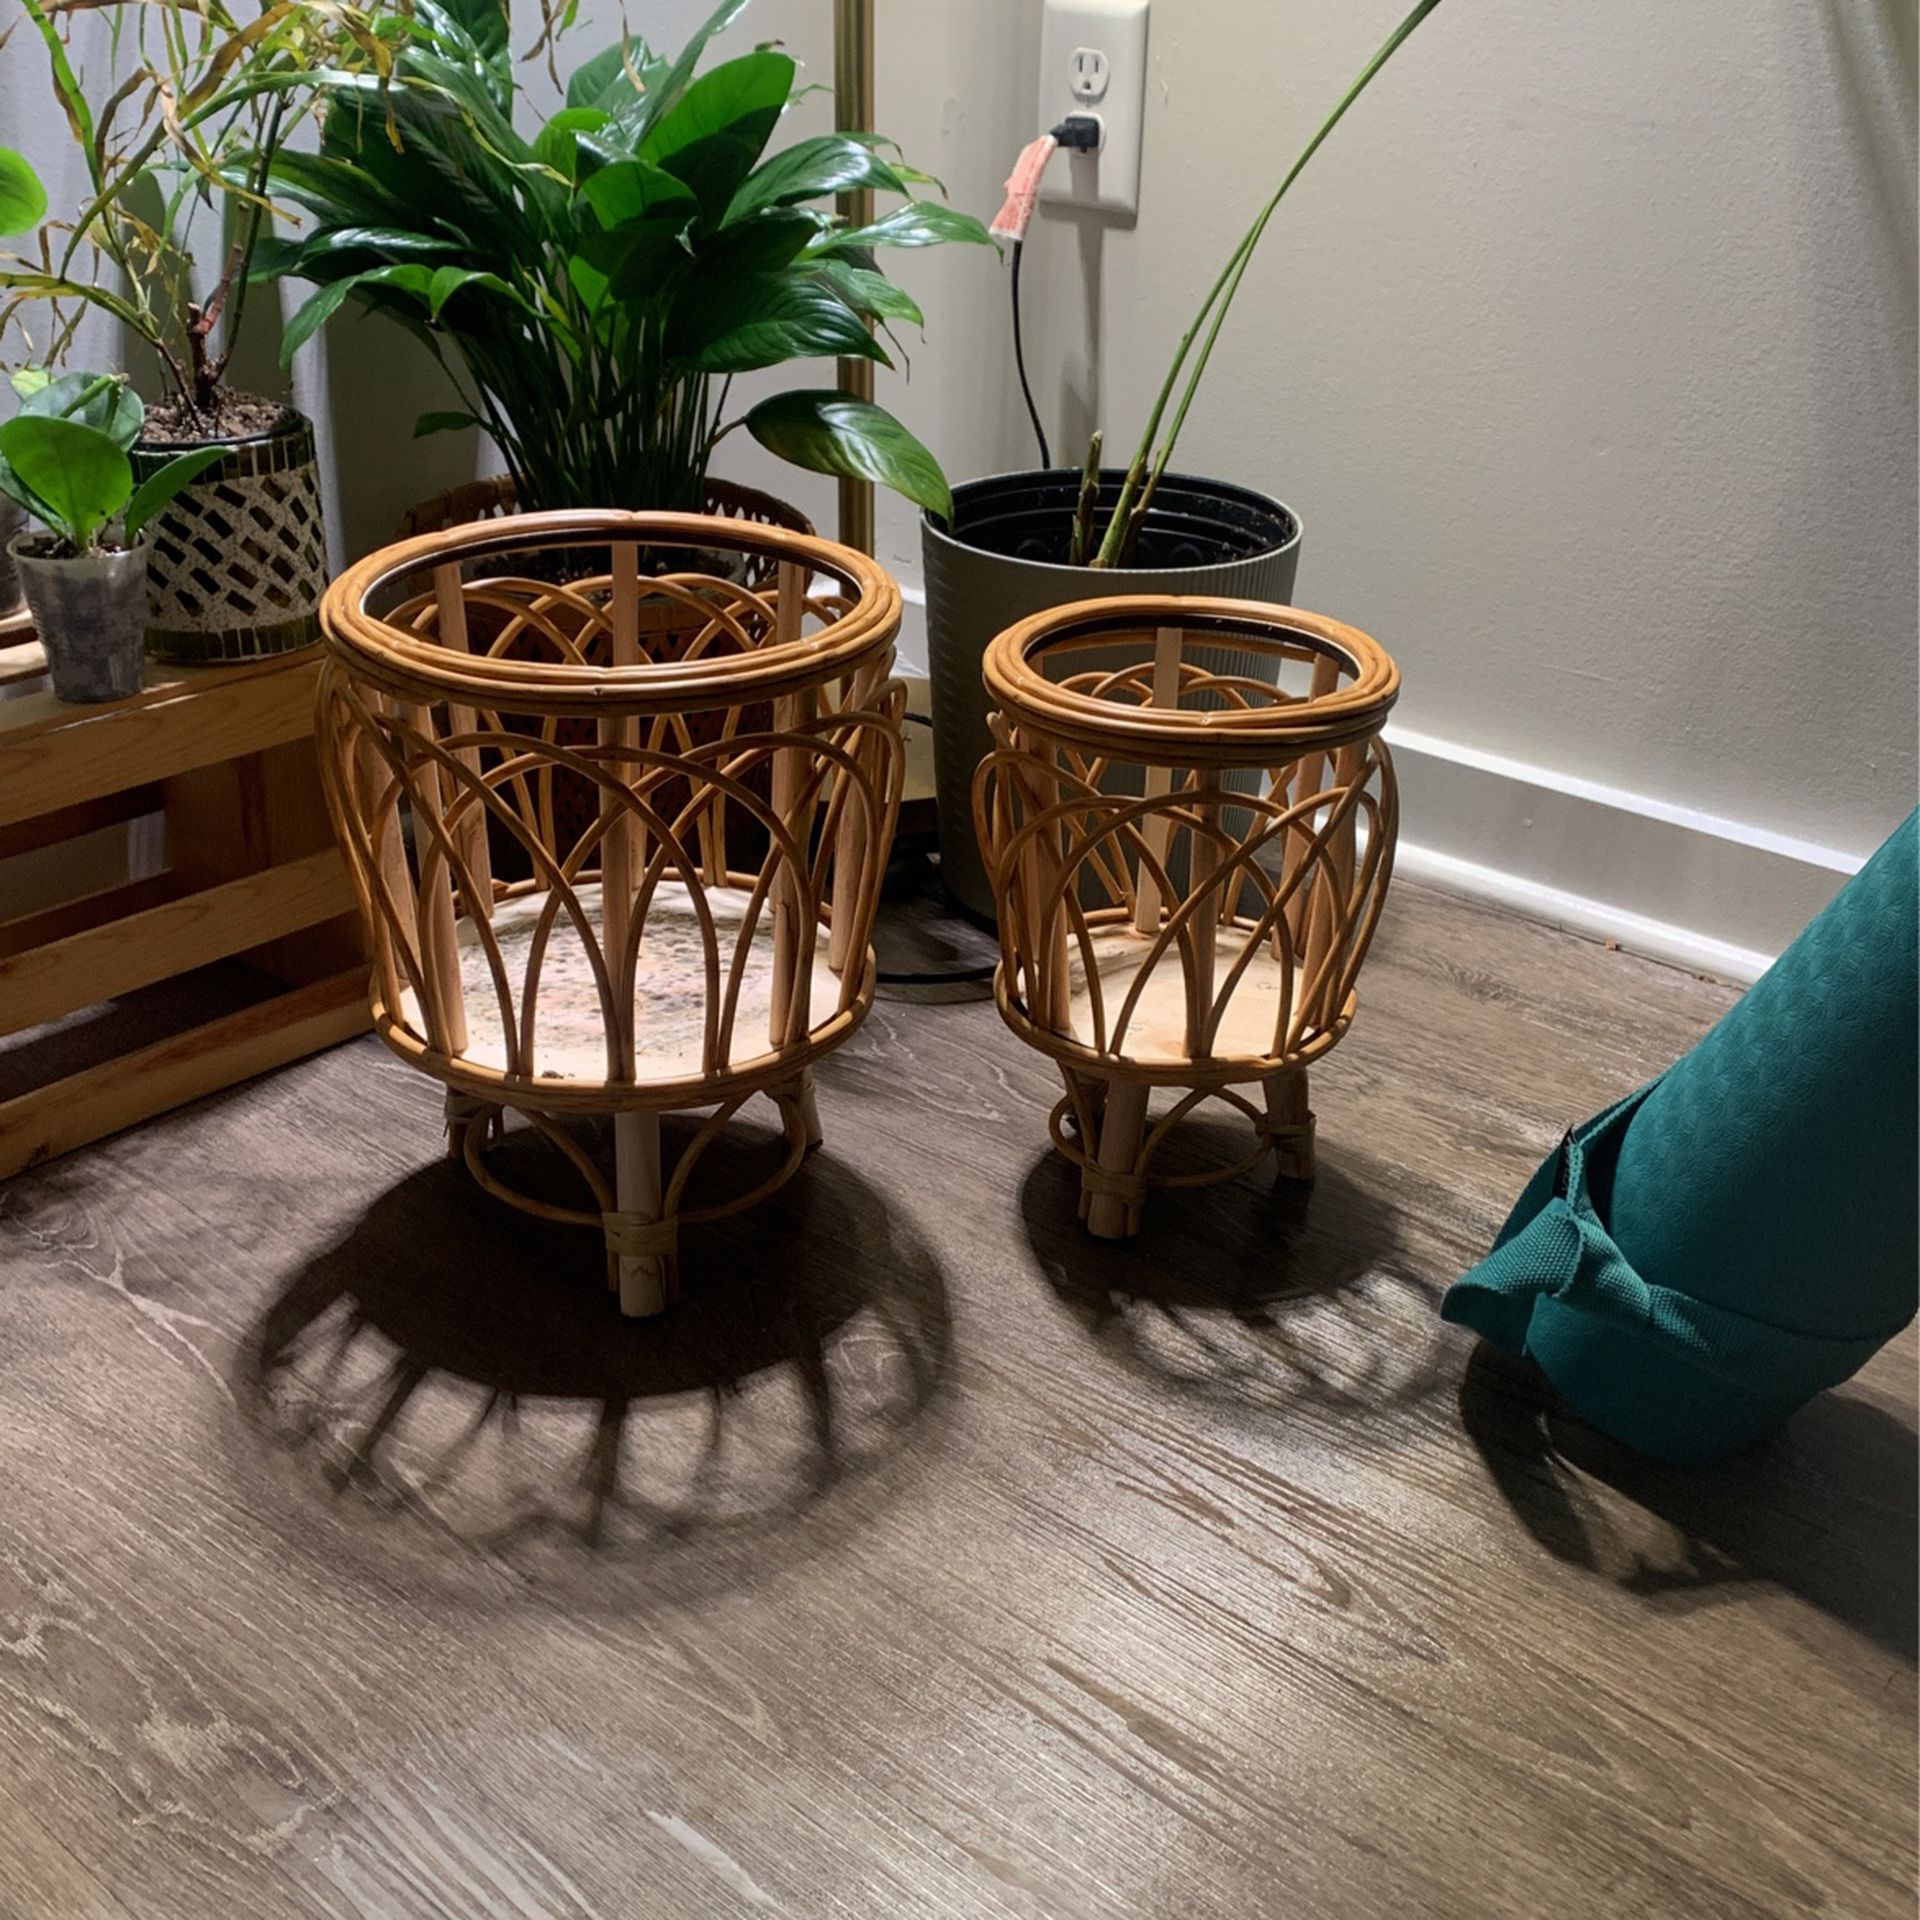 Floor plant baskets